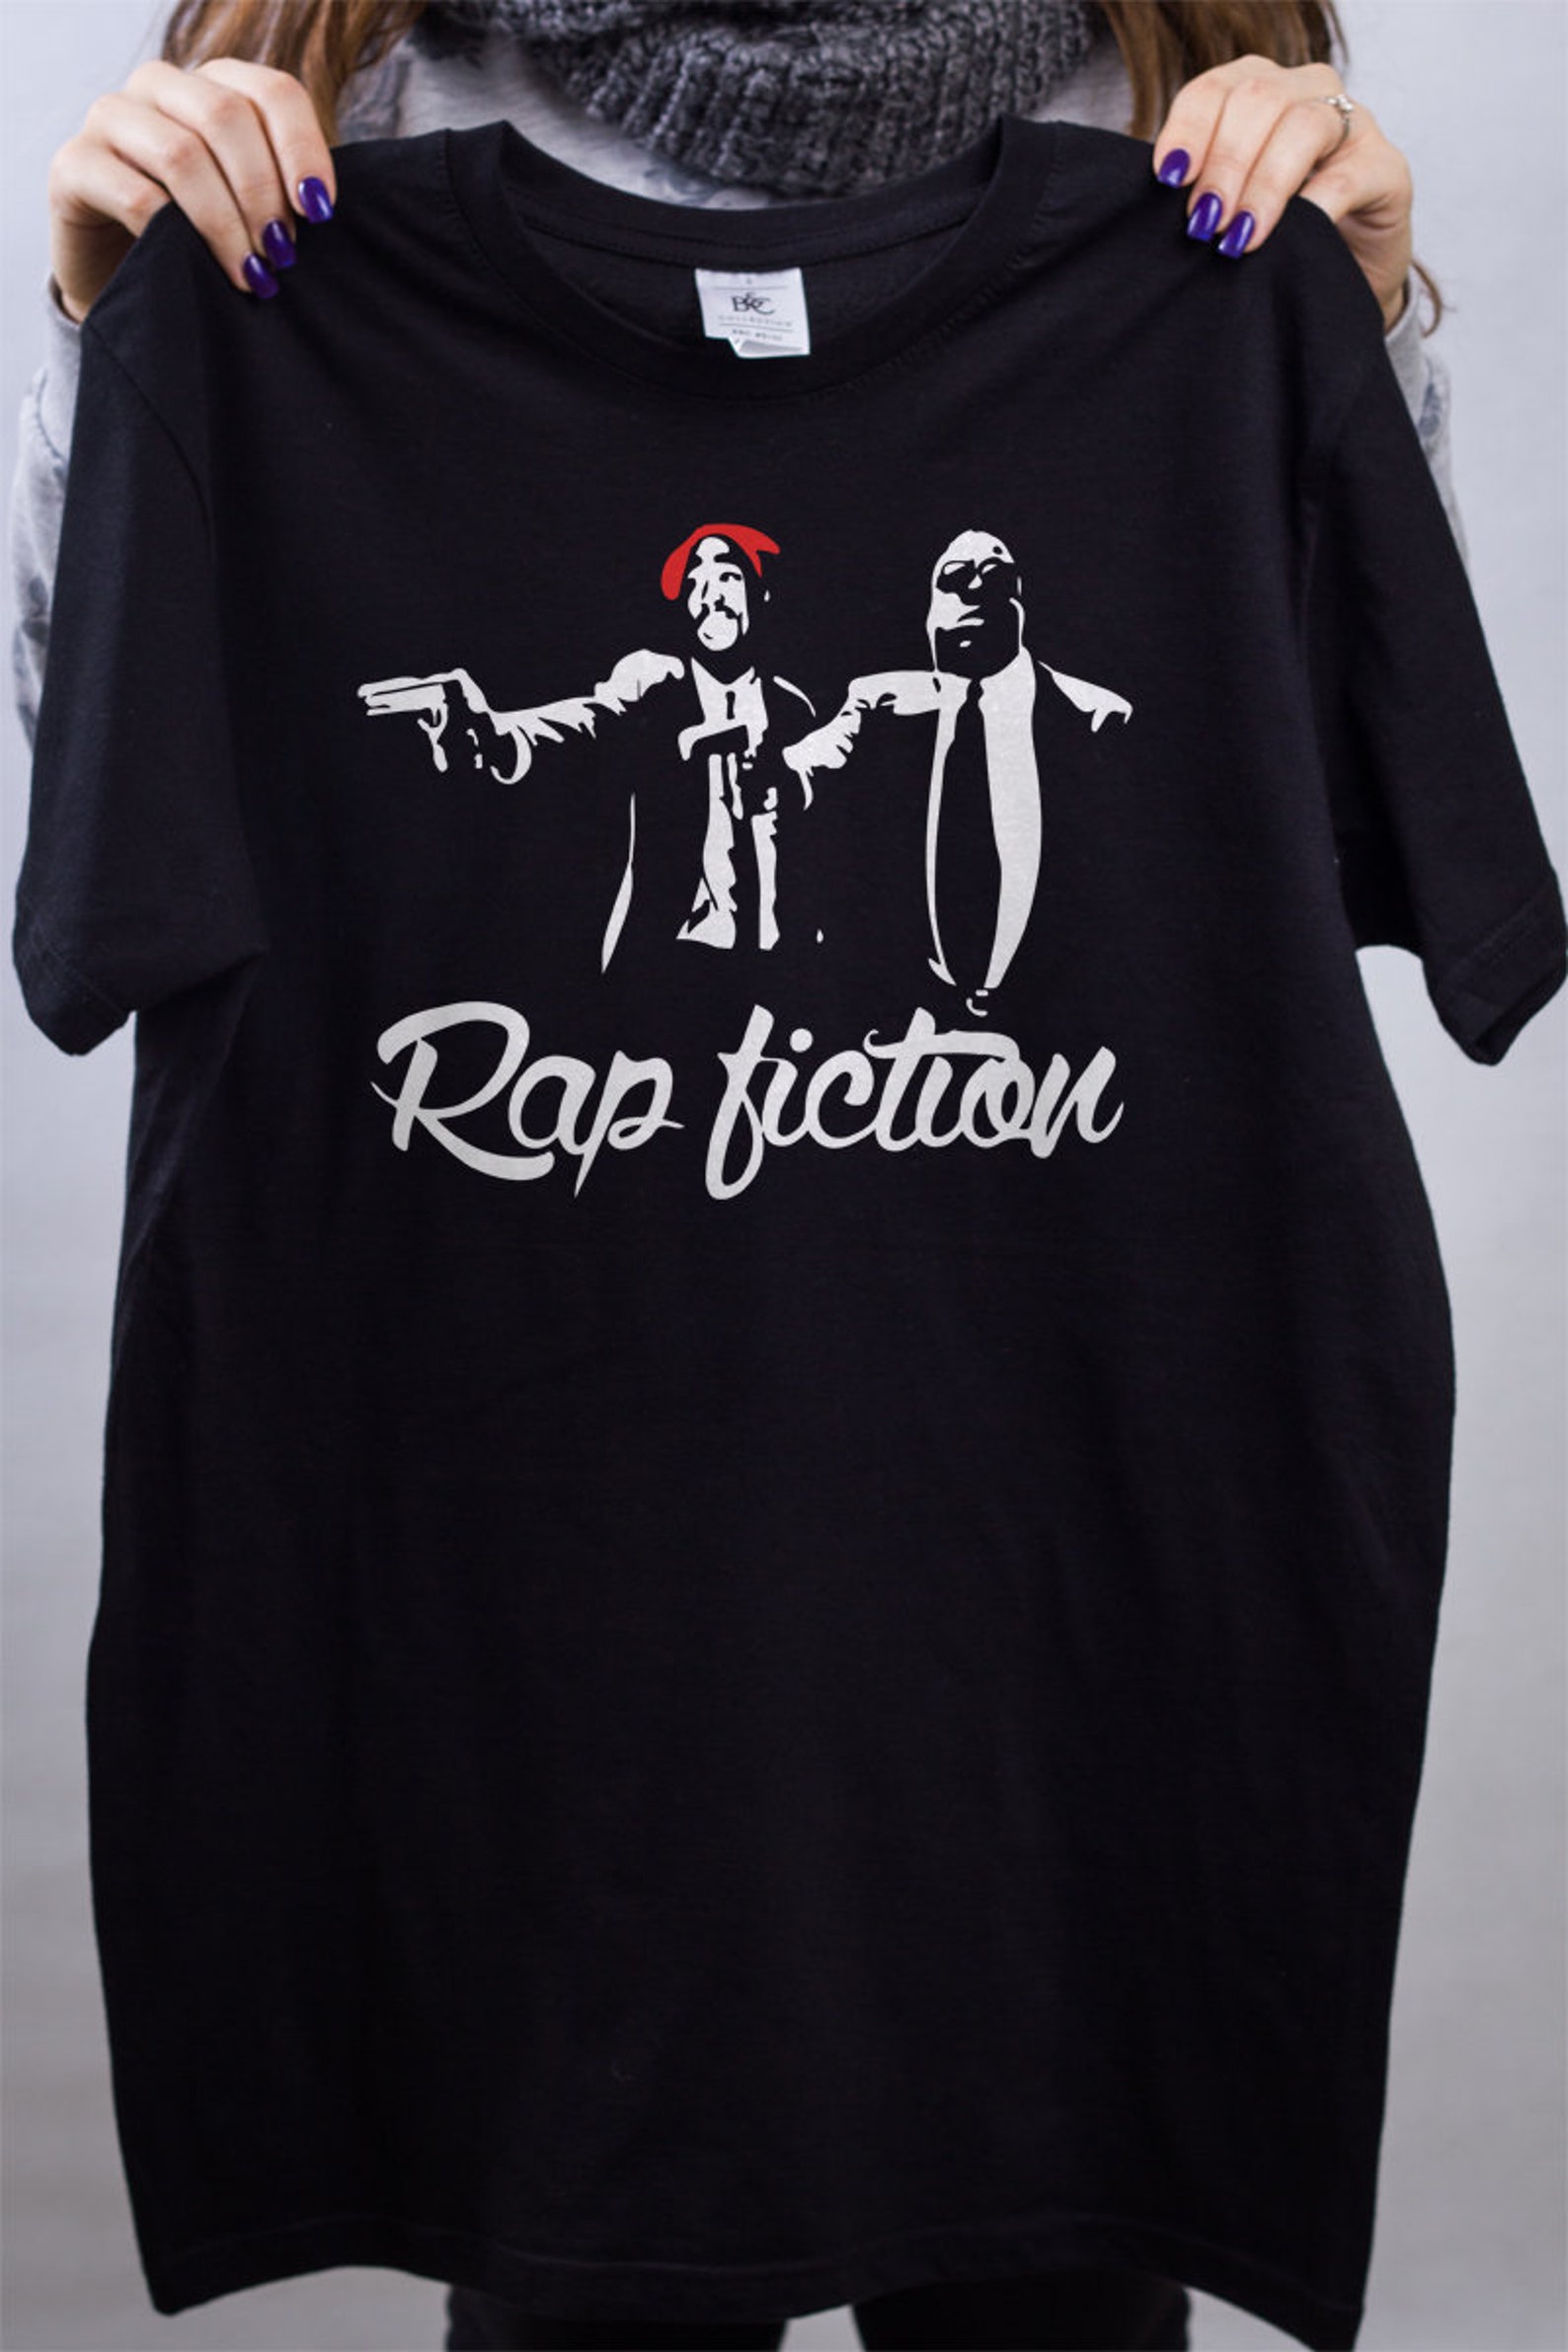 Tupac x Notorious B.I.G. 'Rap Fiction' T-Shirt | Etsy